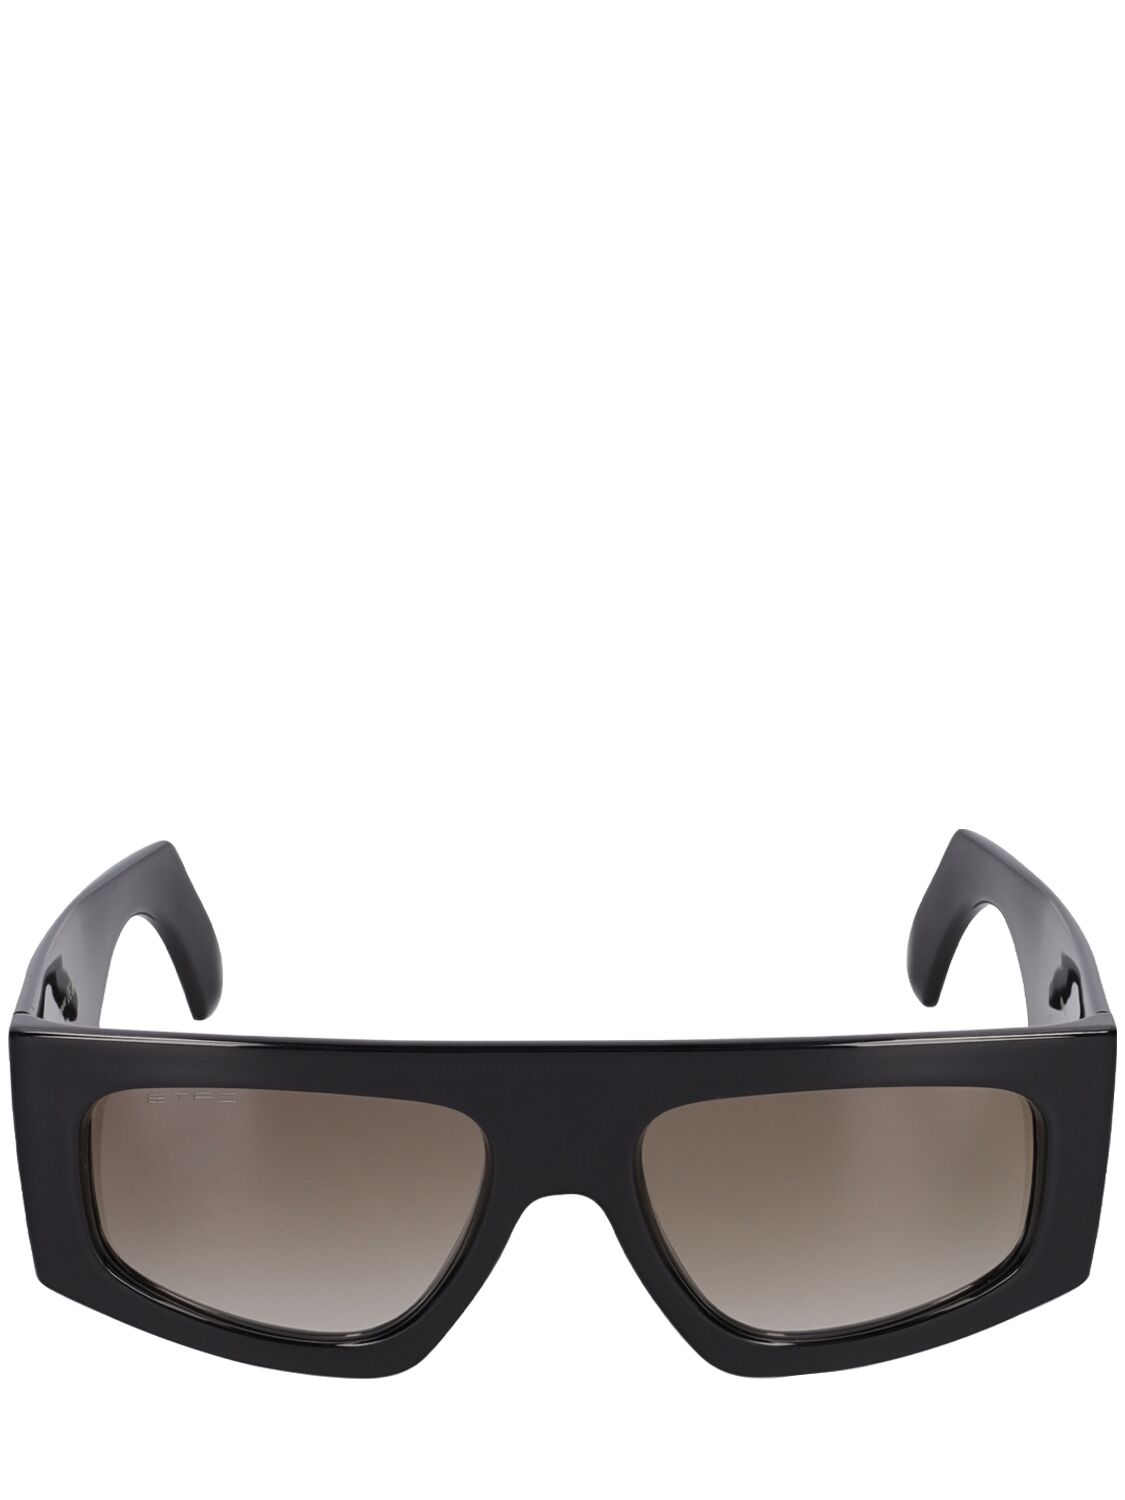 Image of Etroscreen Squared Sunglasses